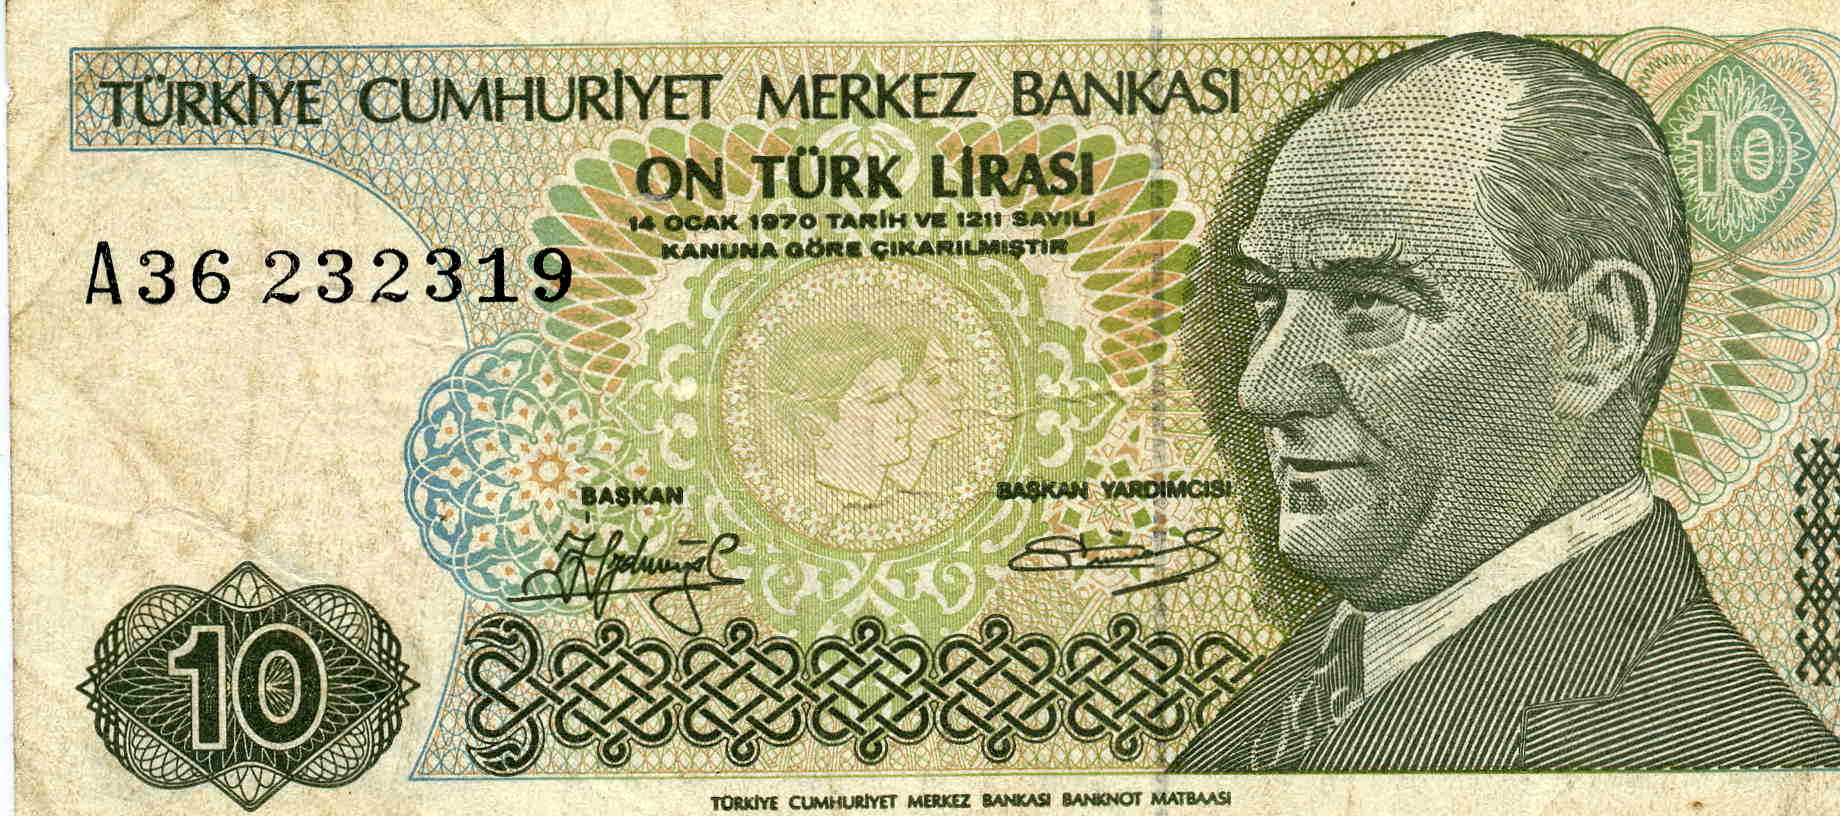 UPDATE 1-Turkey's lira slightly firmer, investors weigh up prospects of better US ties